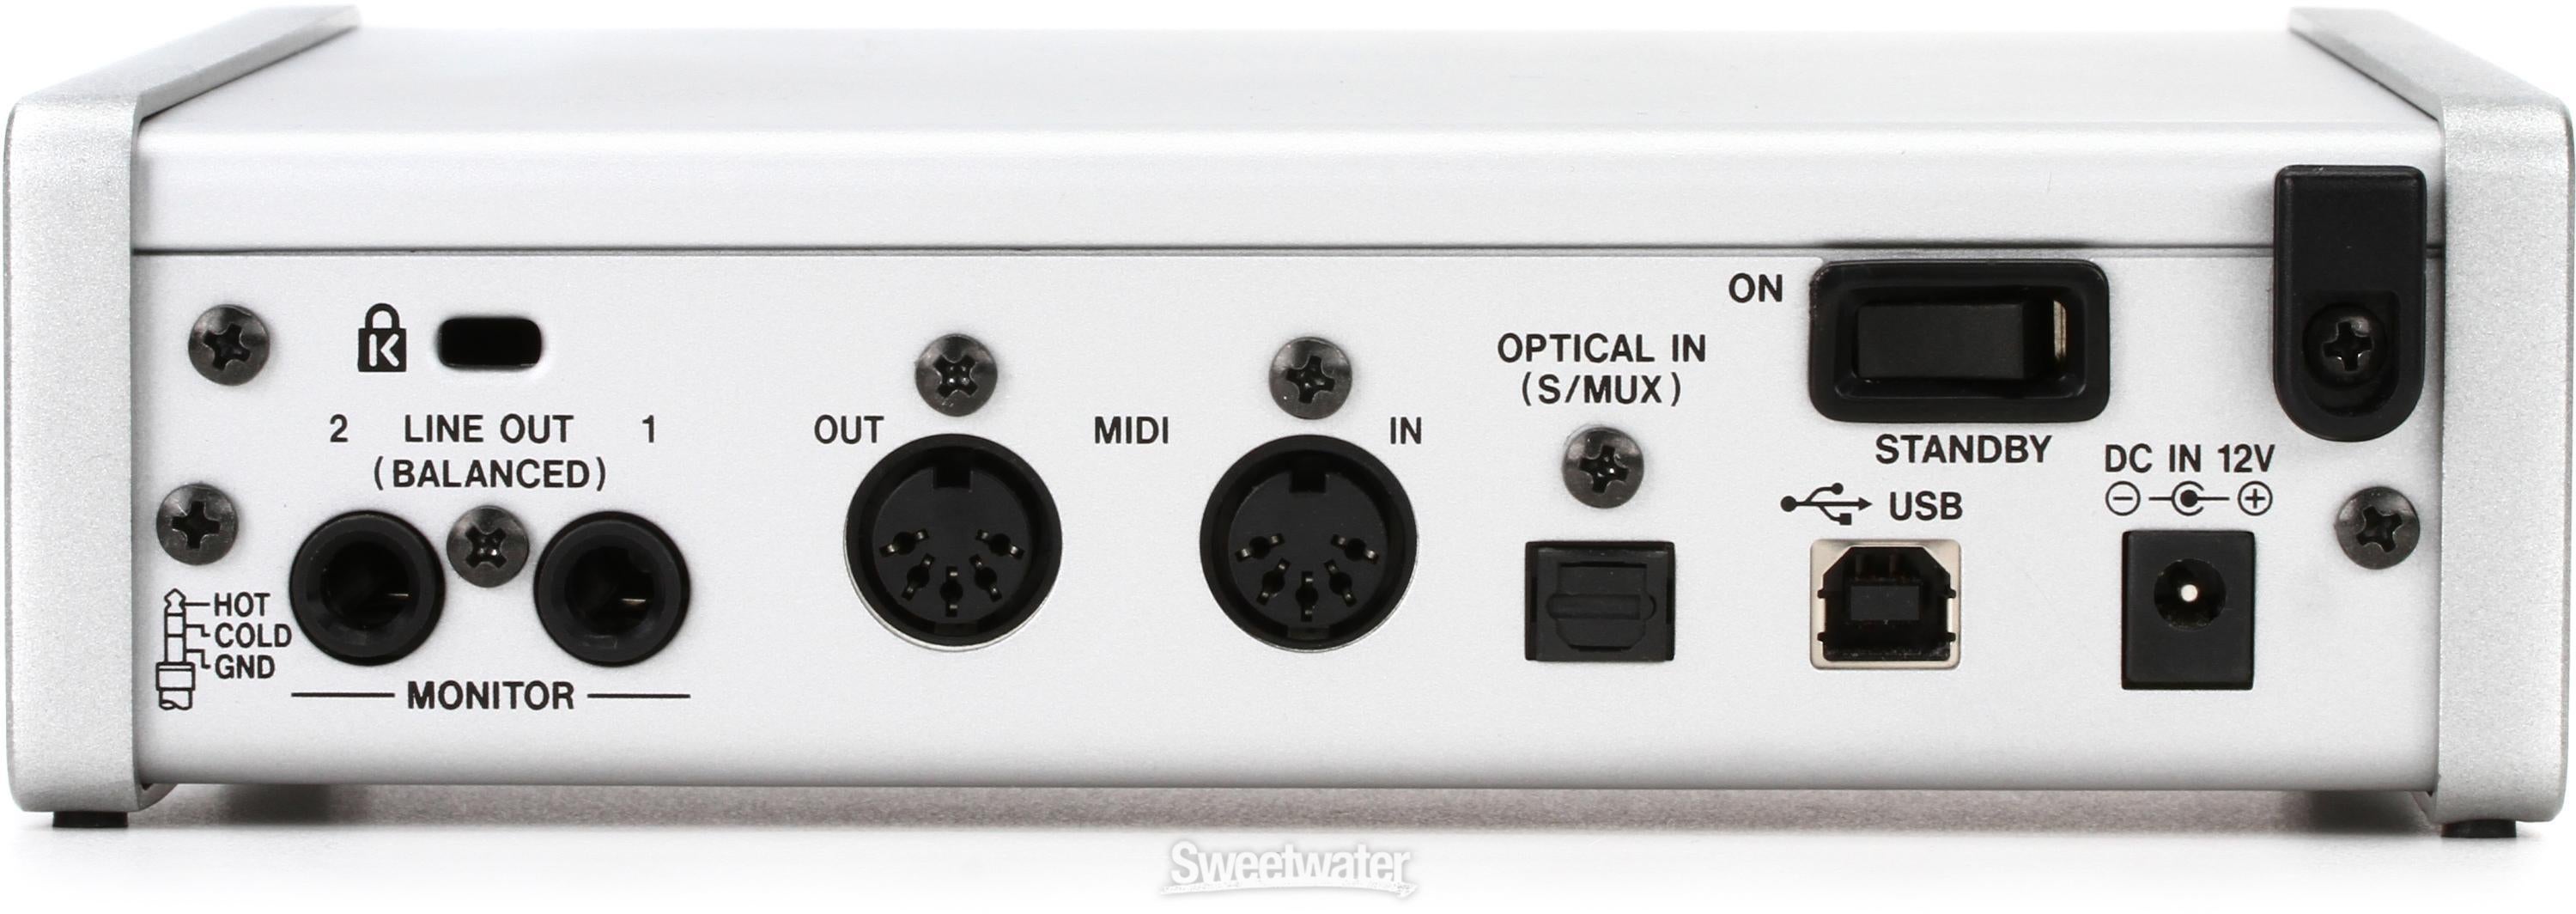 TASCAM Series 102i USB Audio & MIDI Interface | Sweetwater